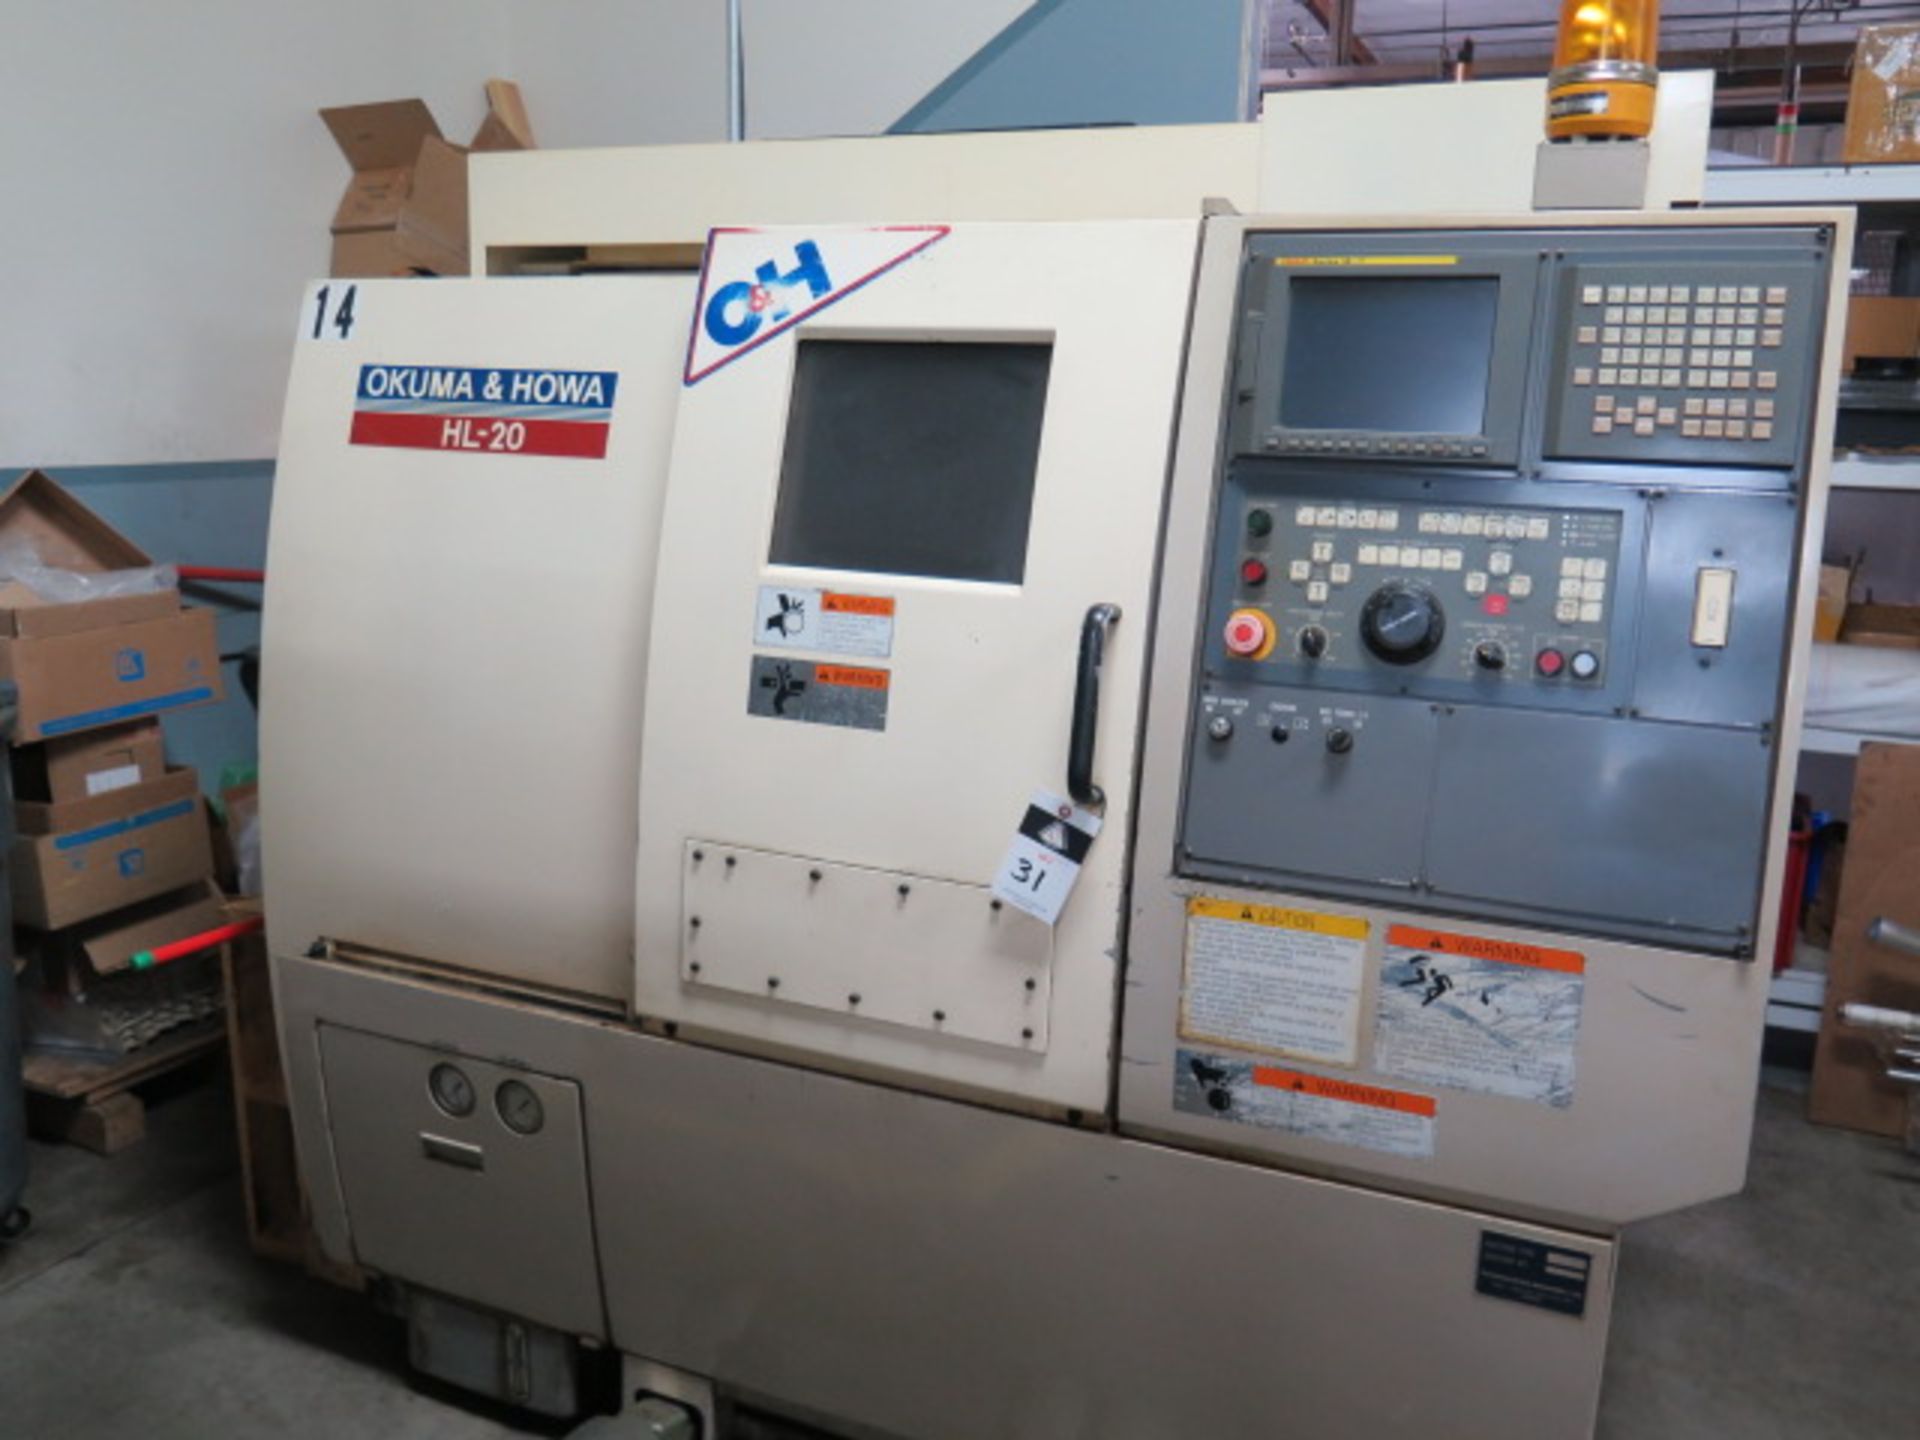 Okuma & Howa HL-20 CNC Turning Center s/n 00888 w/ Fanuc 18i-T Controls, 12-Station, SOLD AS IS - Image 2 of 12